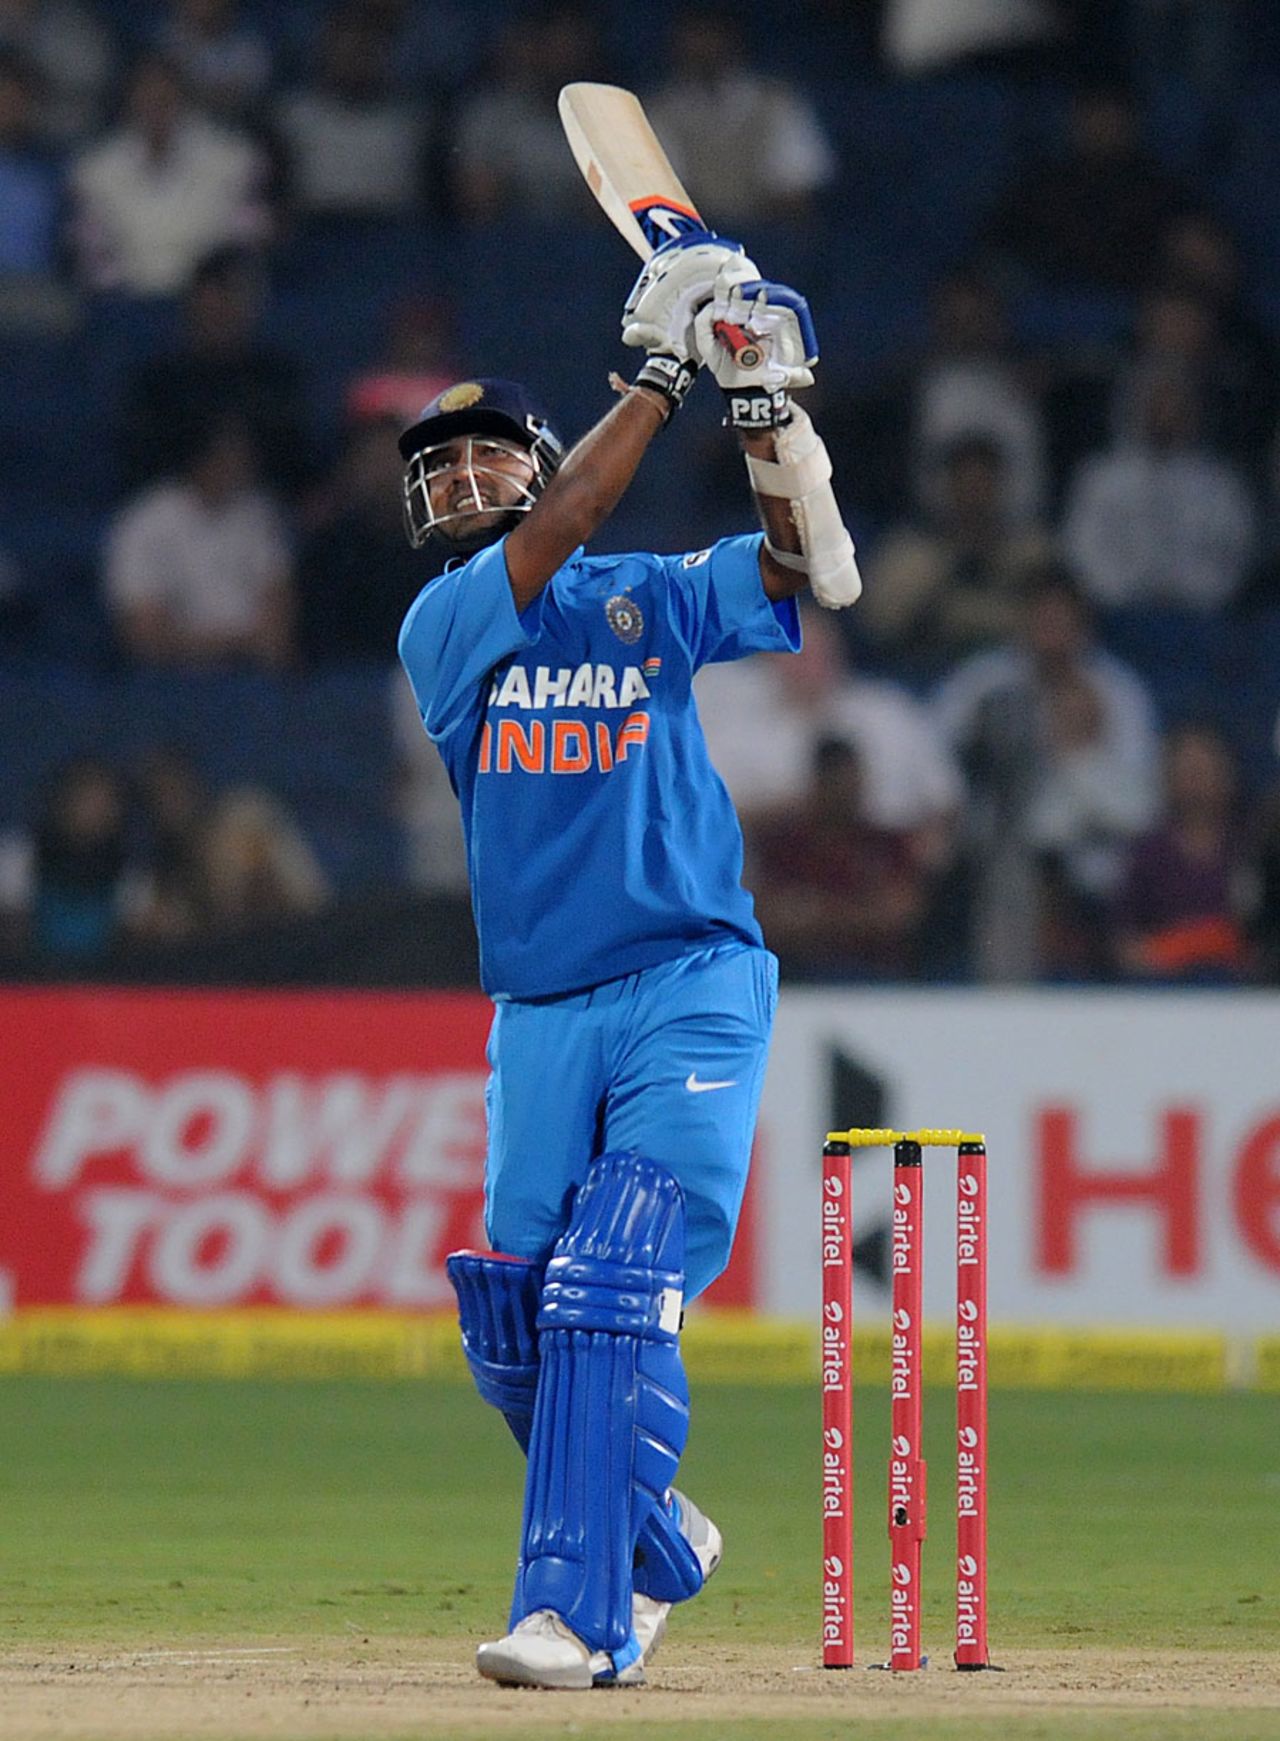 Ajinkya Rahane launches a straight six, India v England, 1st T20, Pune, December 20, 2012